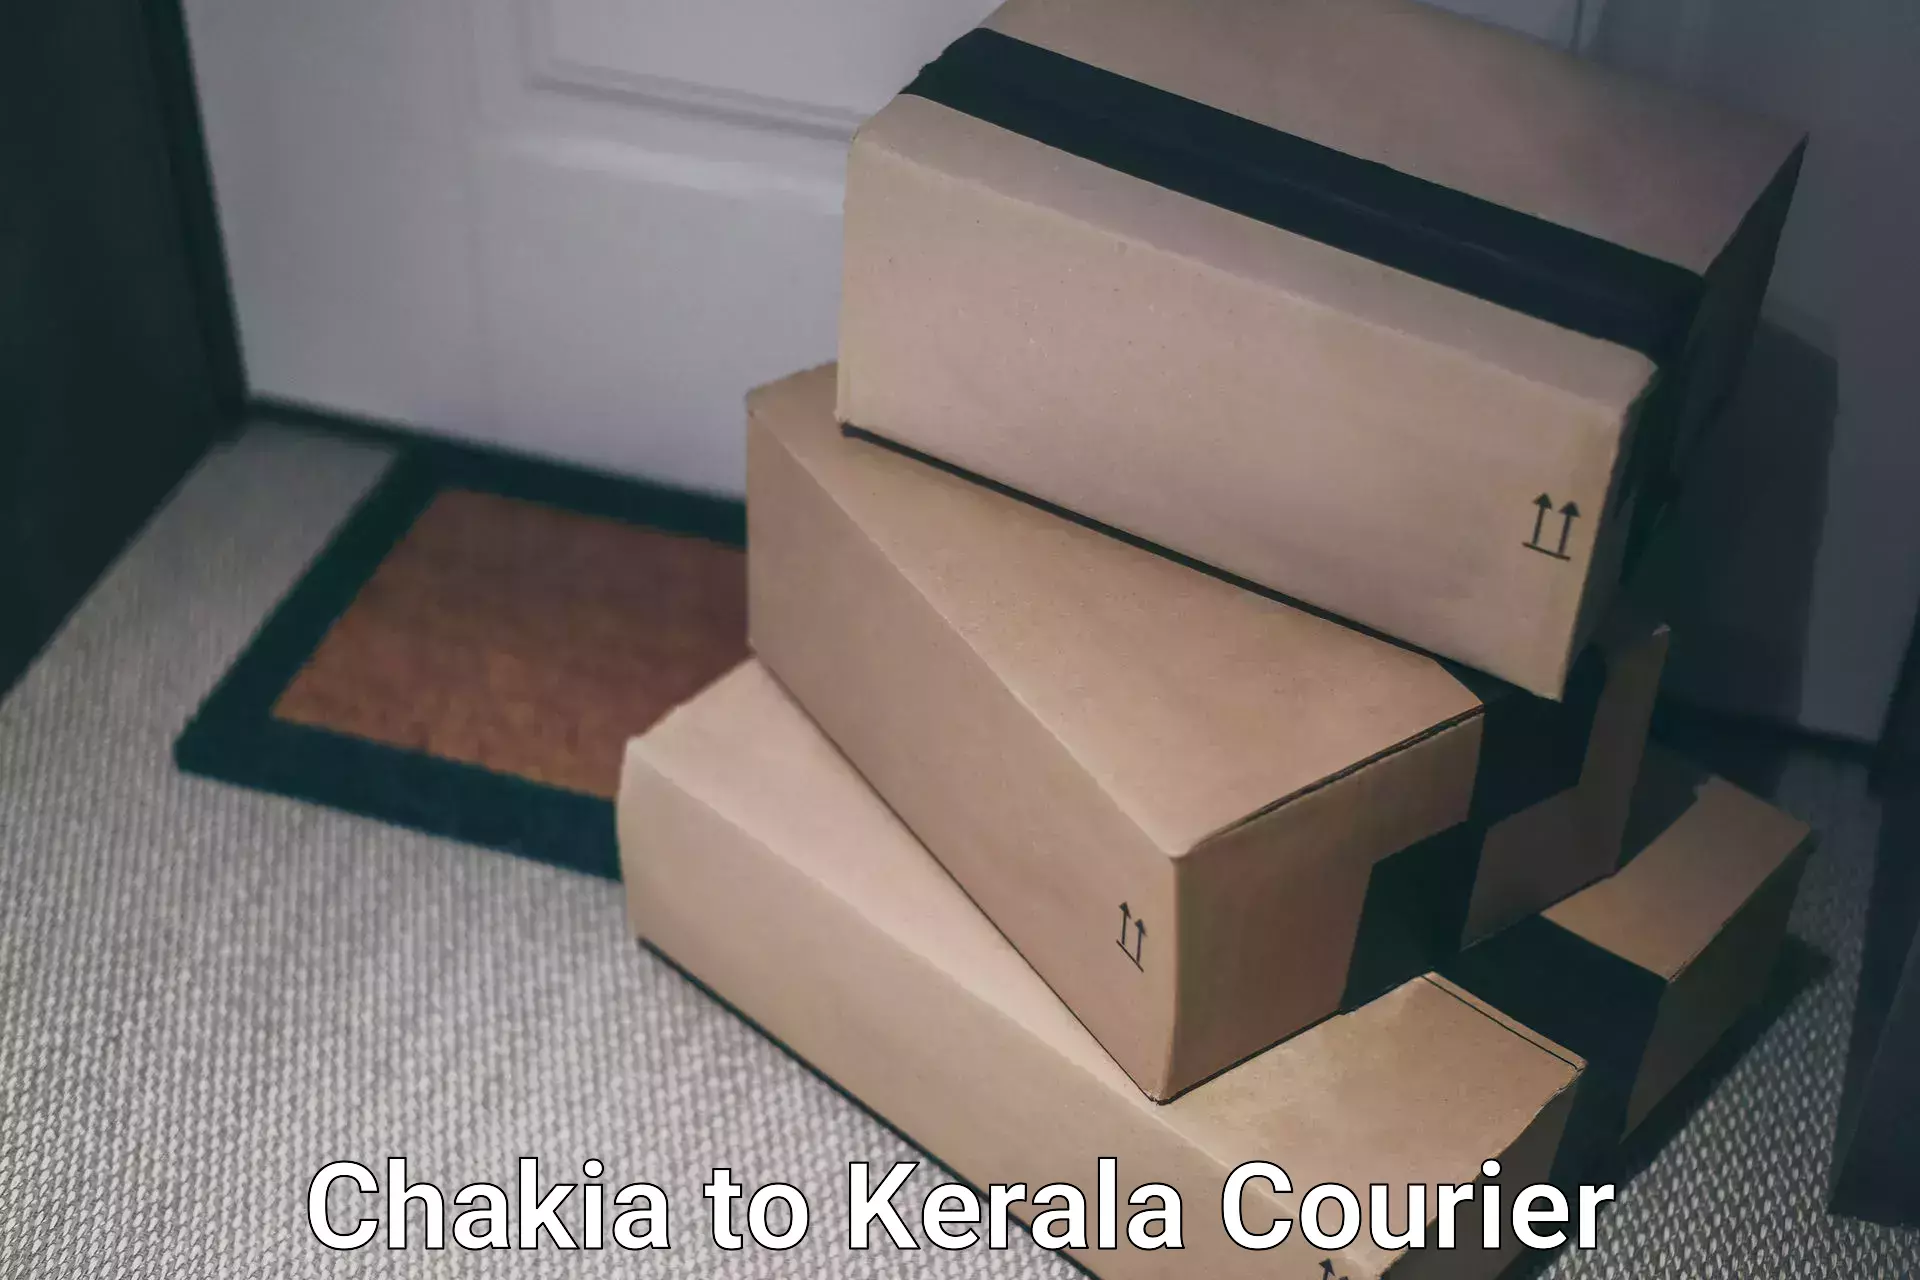 Full-service courier options Chakia to Kuchi